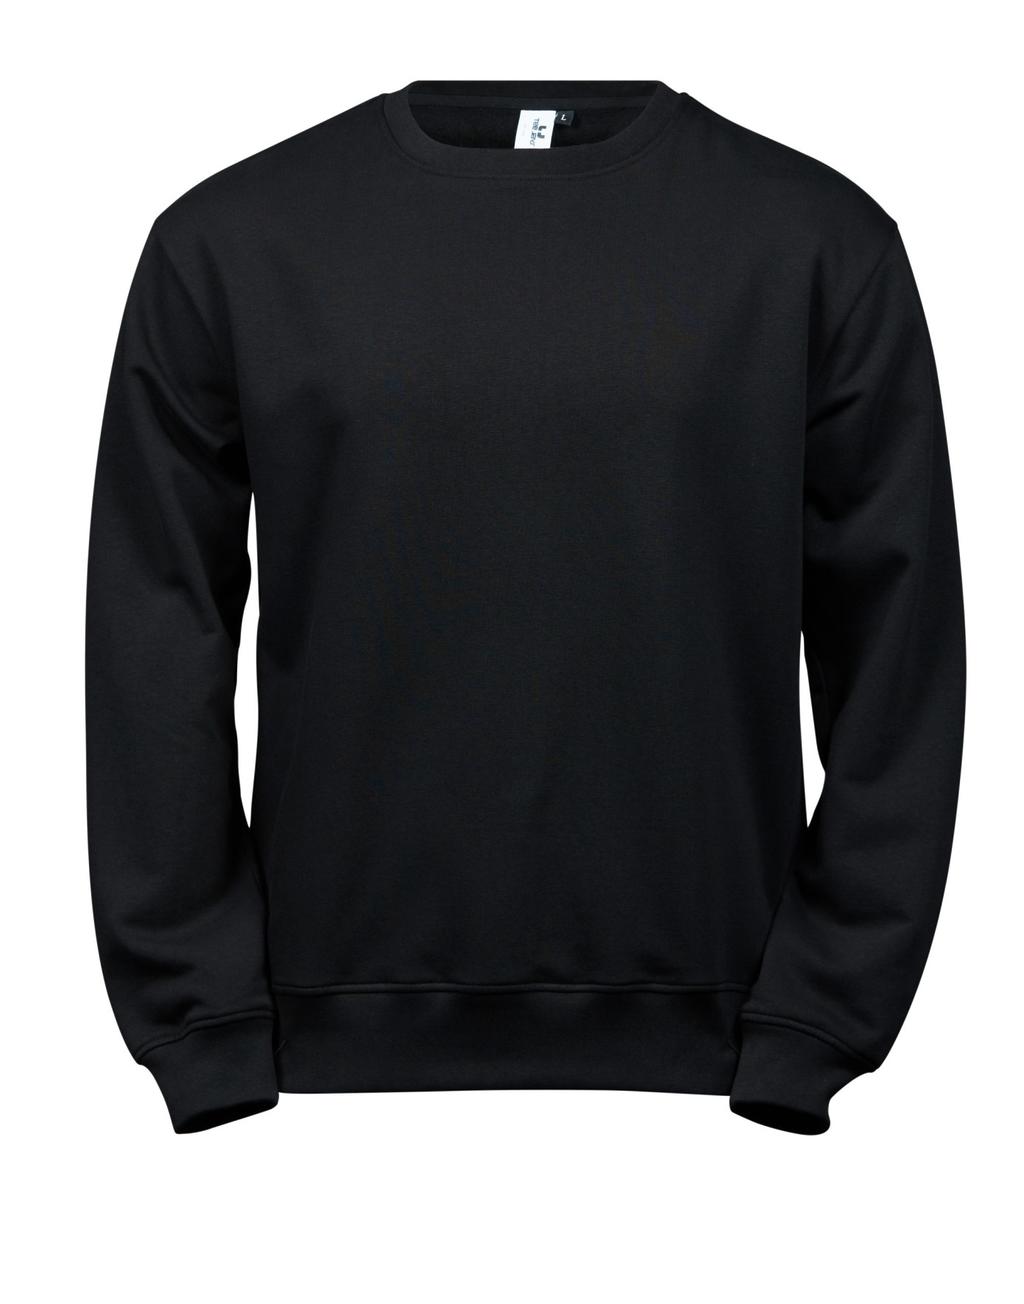  Power Sweatshirt in Farbe Black